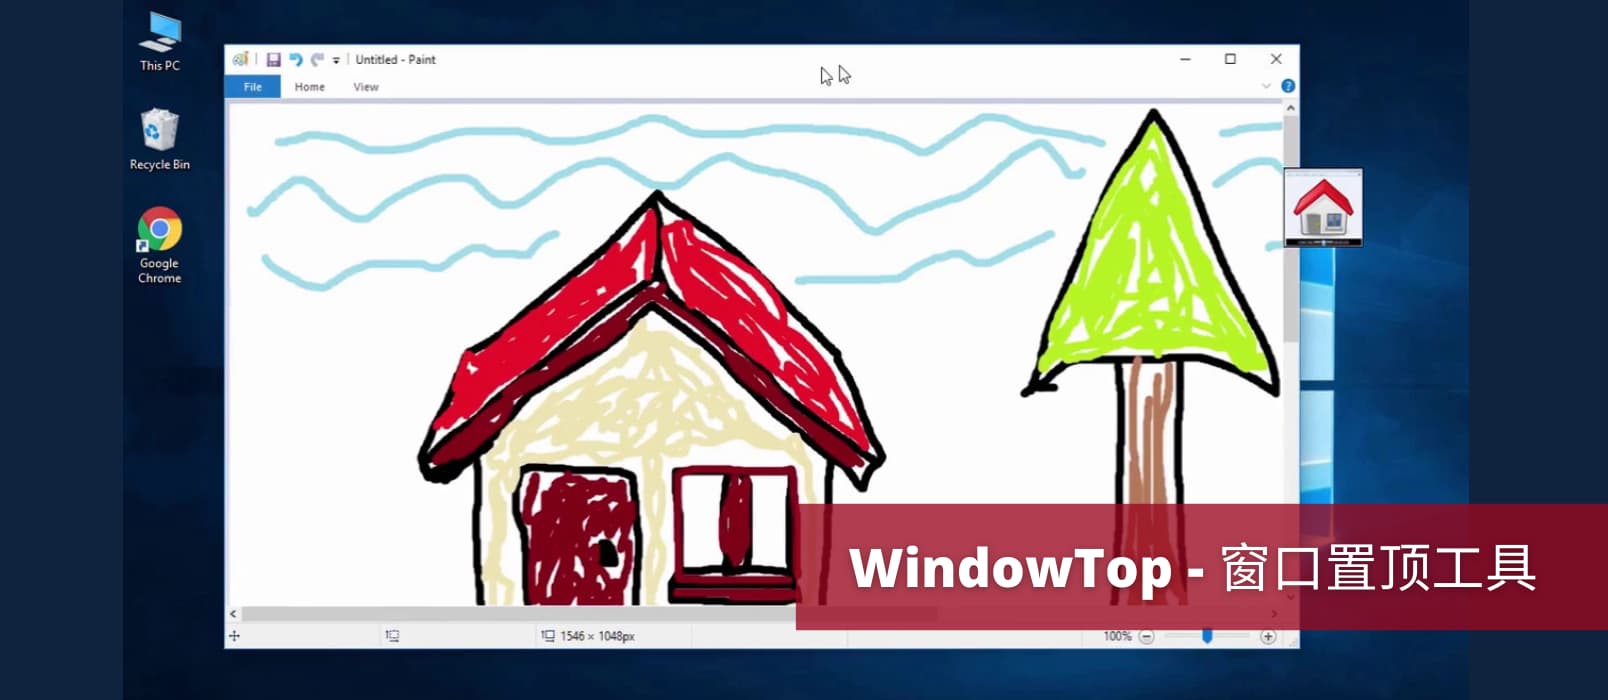 WindowTop - 窗口置顶工具：透明、鼠标穿透、画中画、深色模式、毛玻璃效果，功能有点强